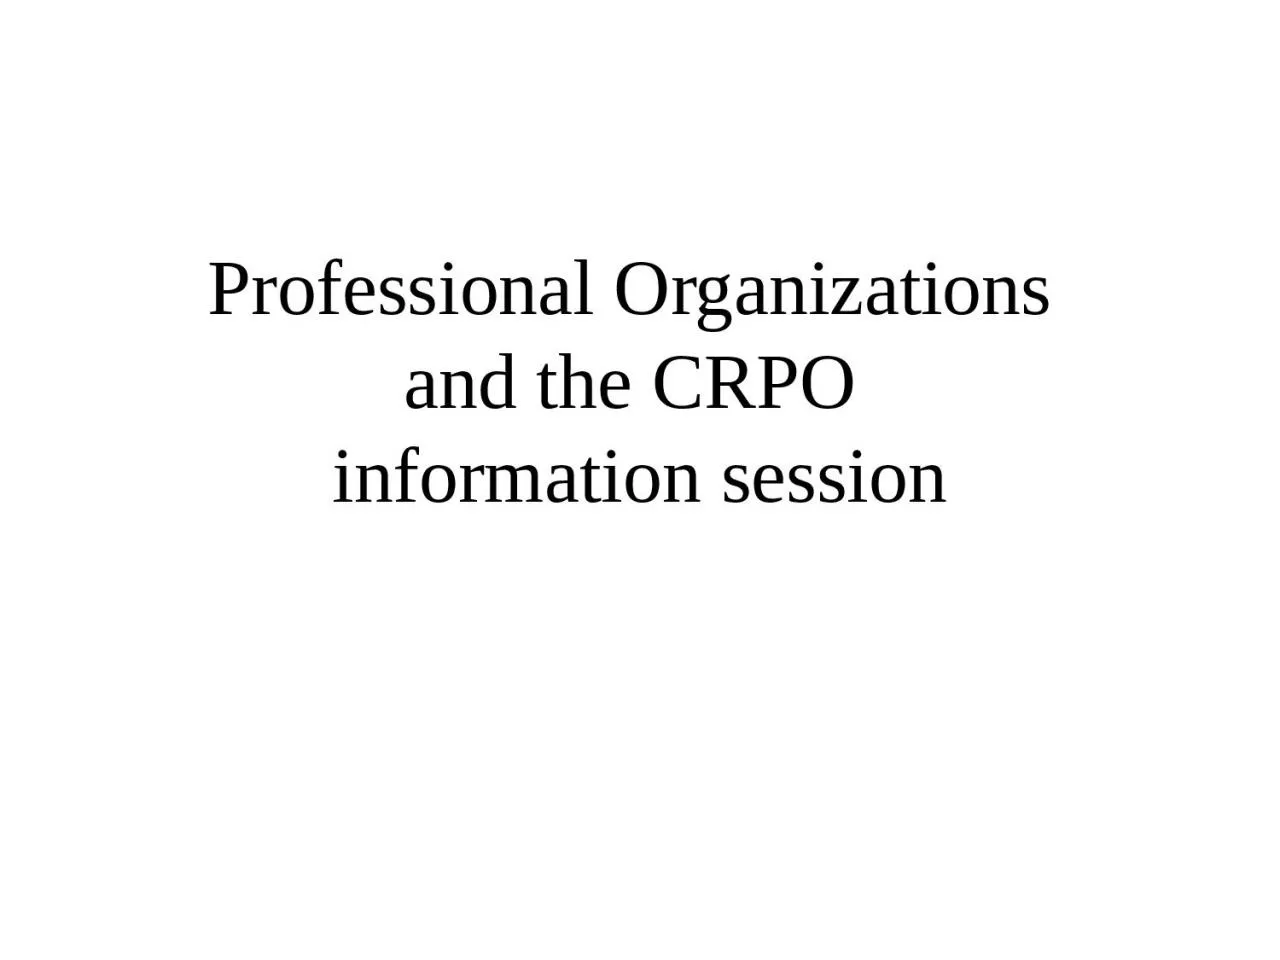 Professional Organizations